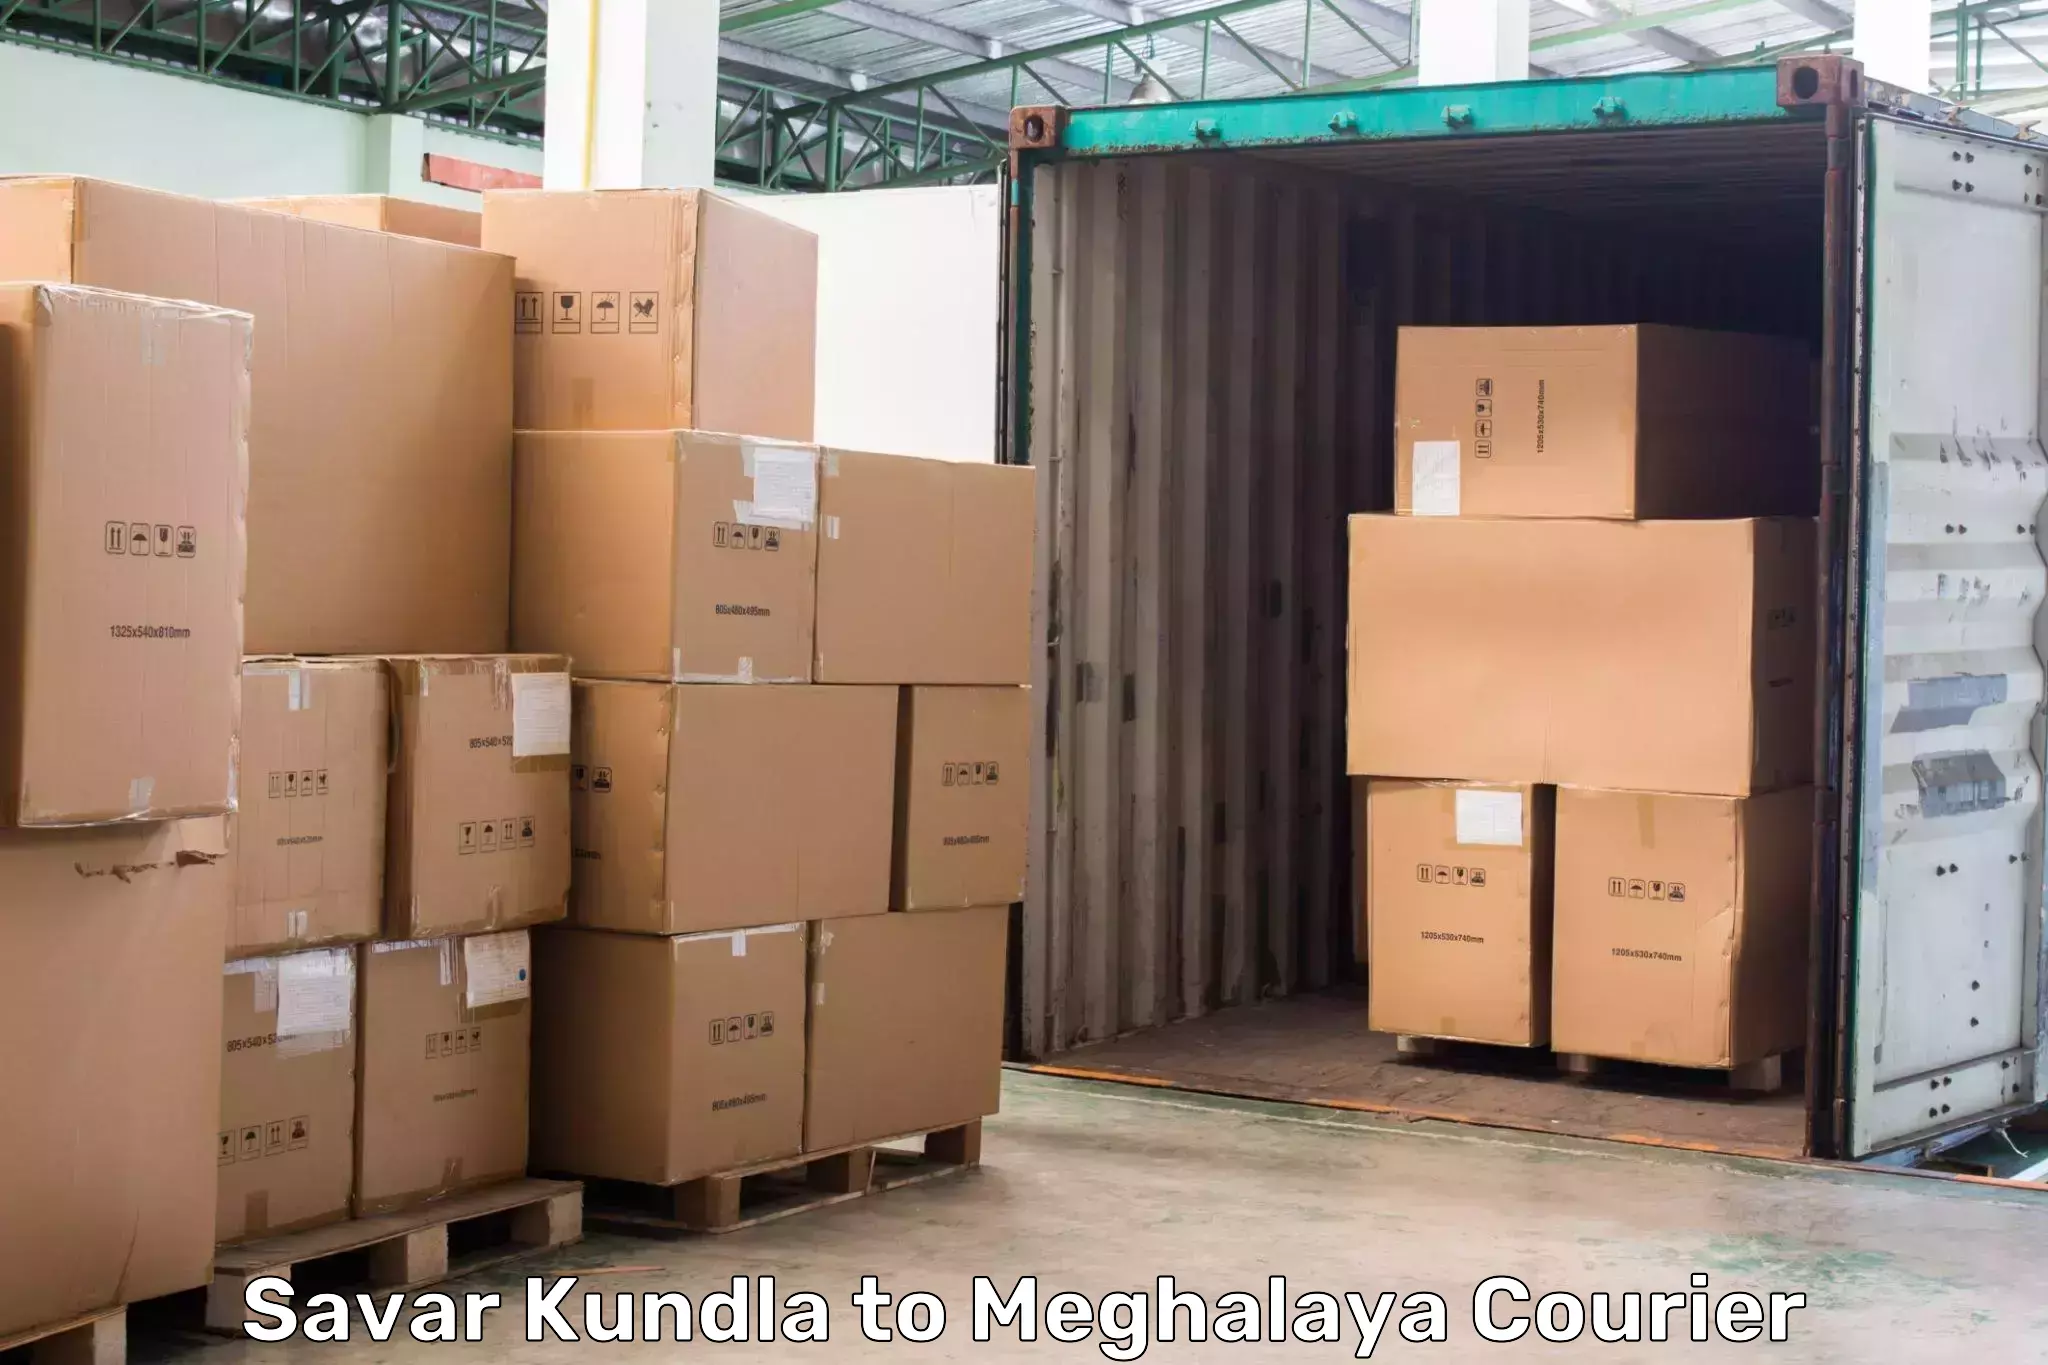 Same-day delivery solutions Savar Kundla to Meghalaya